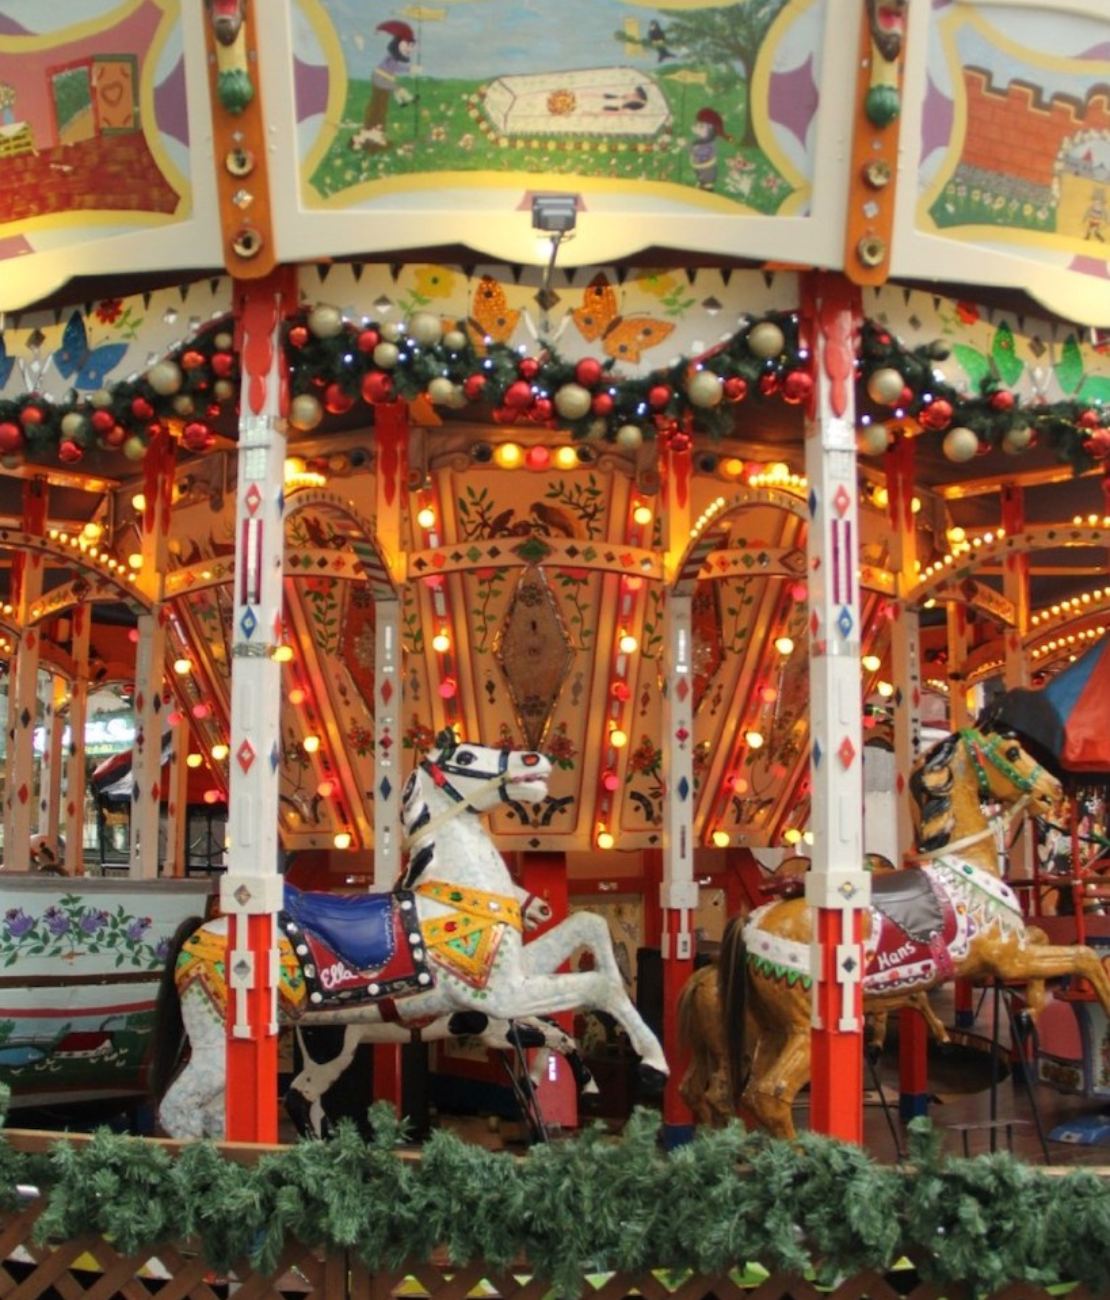 Carousel at the German Christmas Market in Osaka, Japan